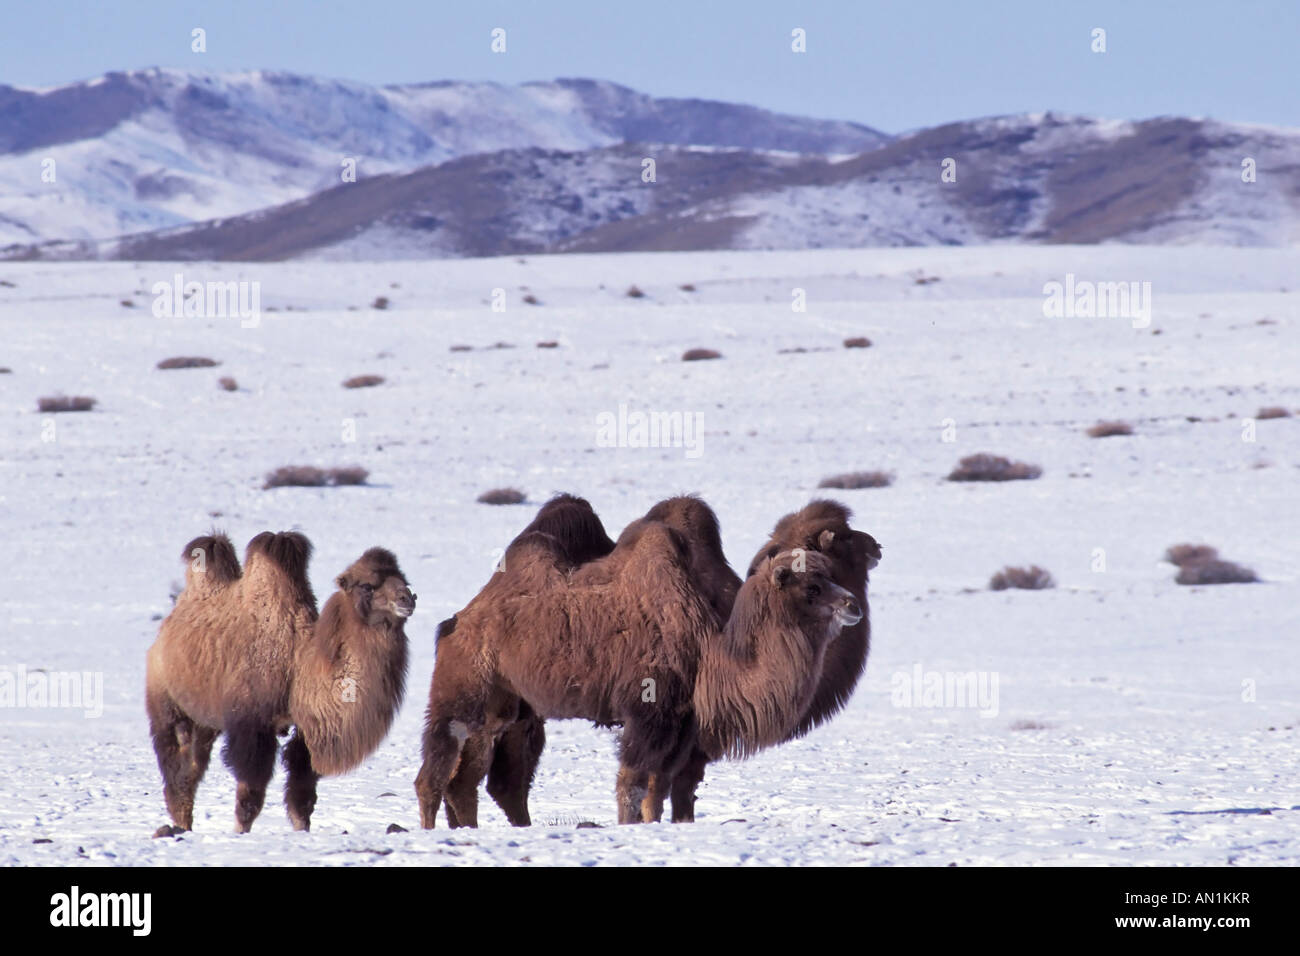 Two humped domestic Bactrian camel Zweihoeckriges Hauskamel Camelus ferus Mongolia February Altai Mountains Mongolia Stock Photo